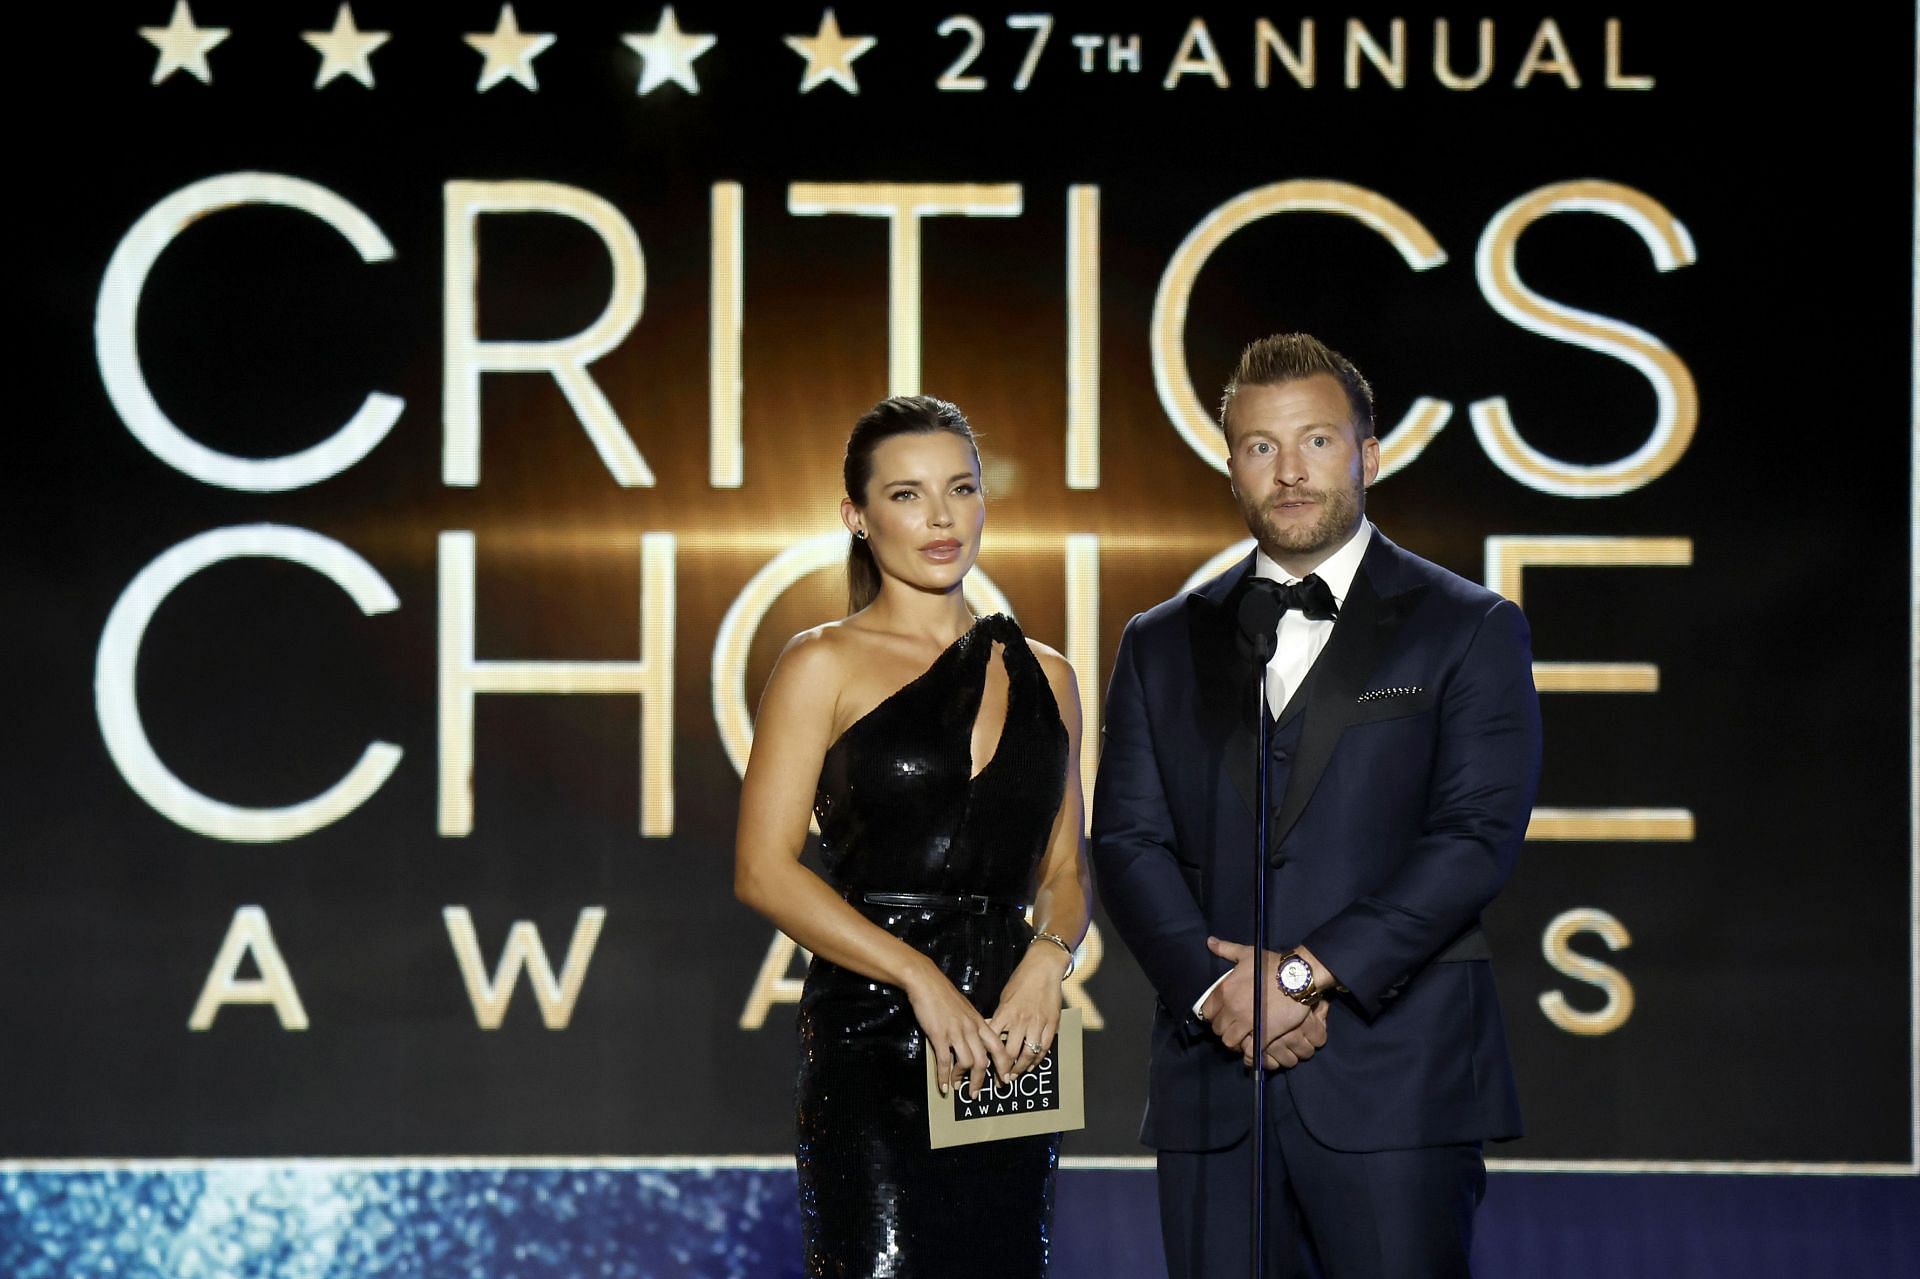 The pair at the 27th Annual Critics Choice Awards - Show